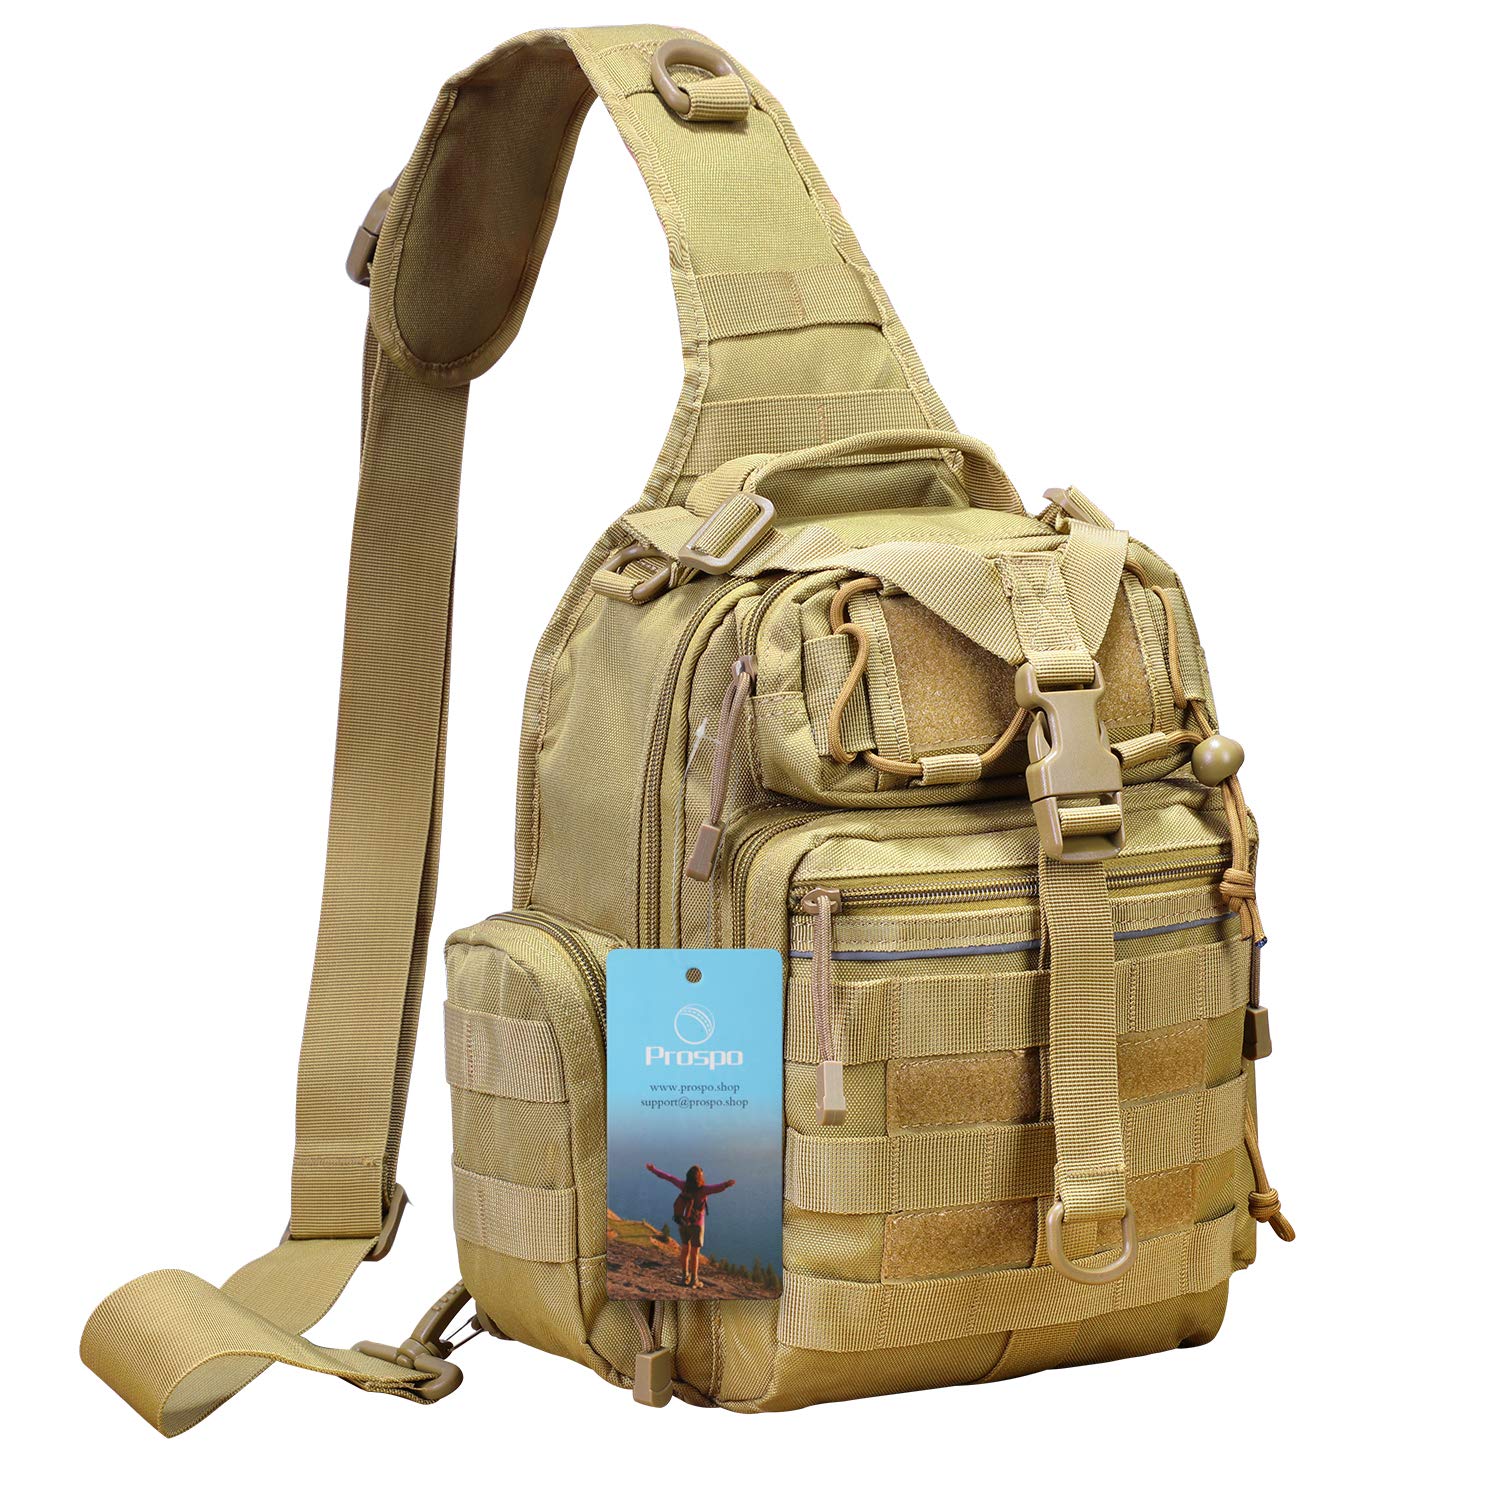 Amazon.co.uk: Backpack Sling Bag | The Art of Mike Mignola